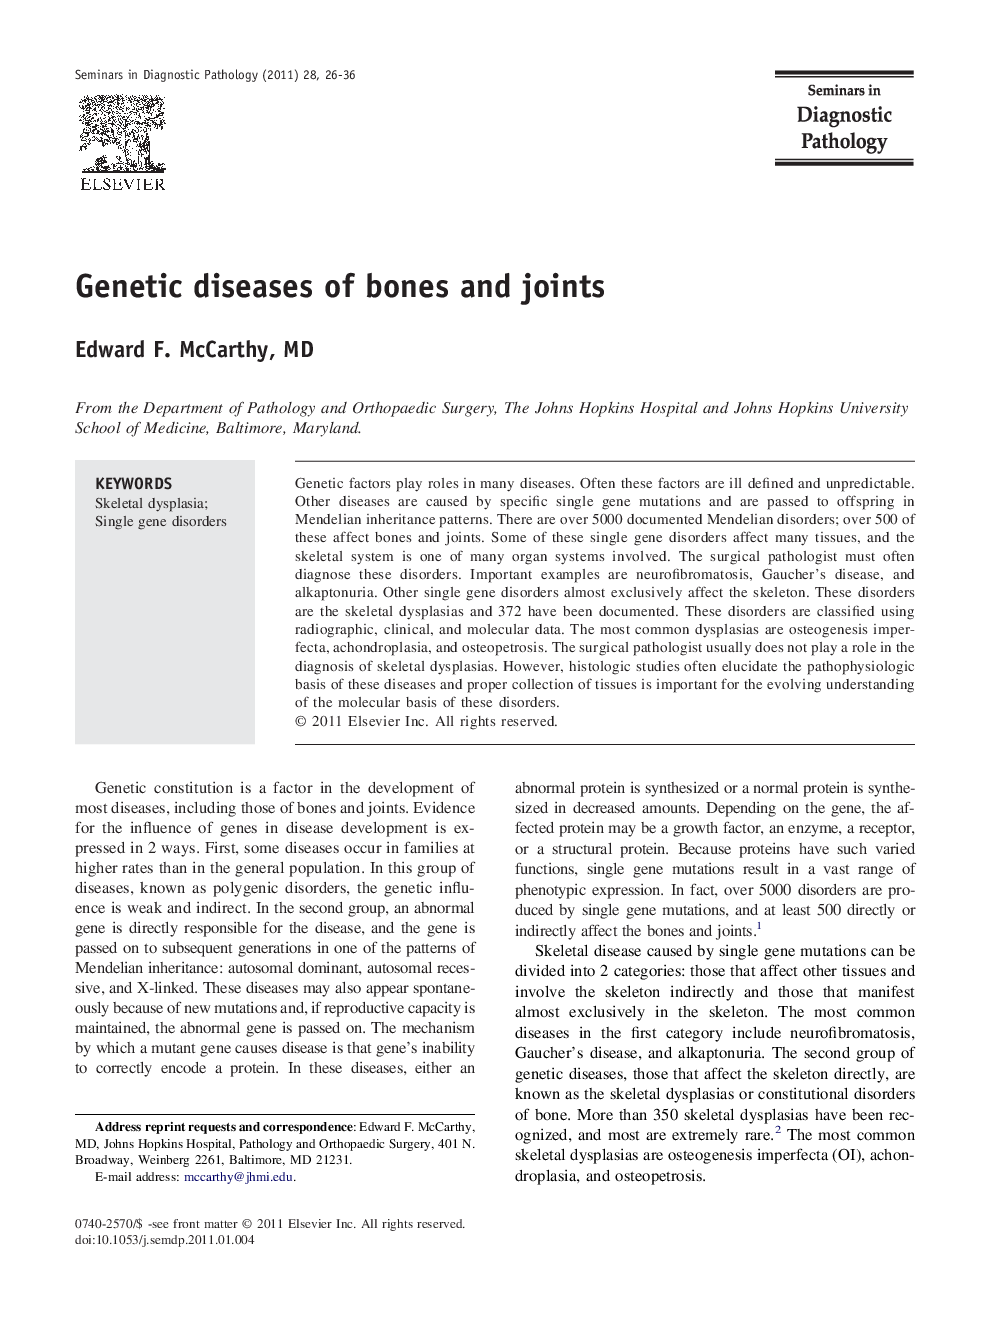 Genetic diseases of bones and joints